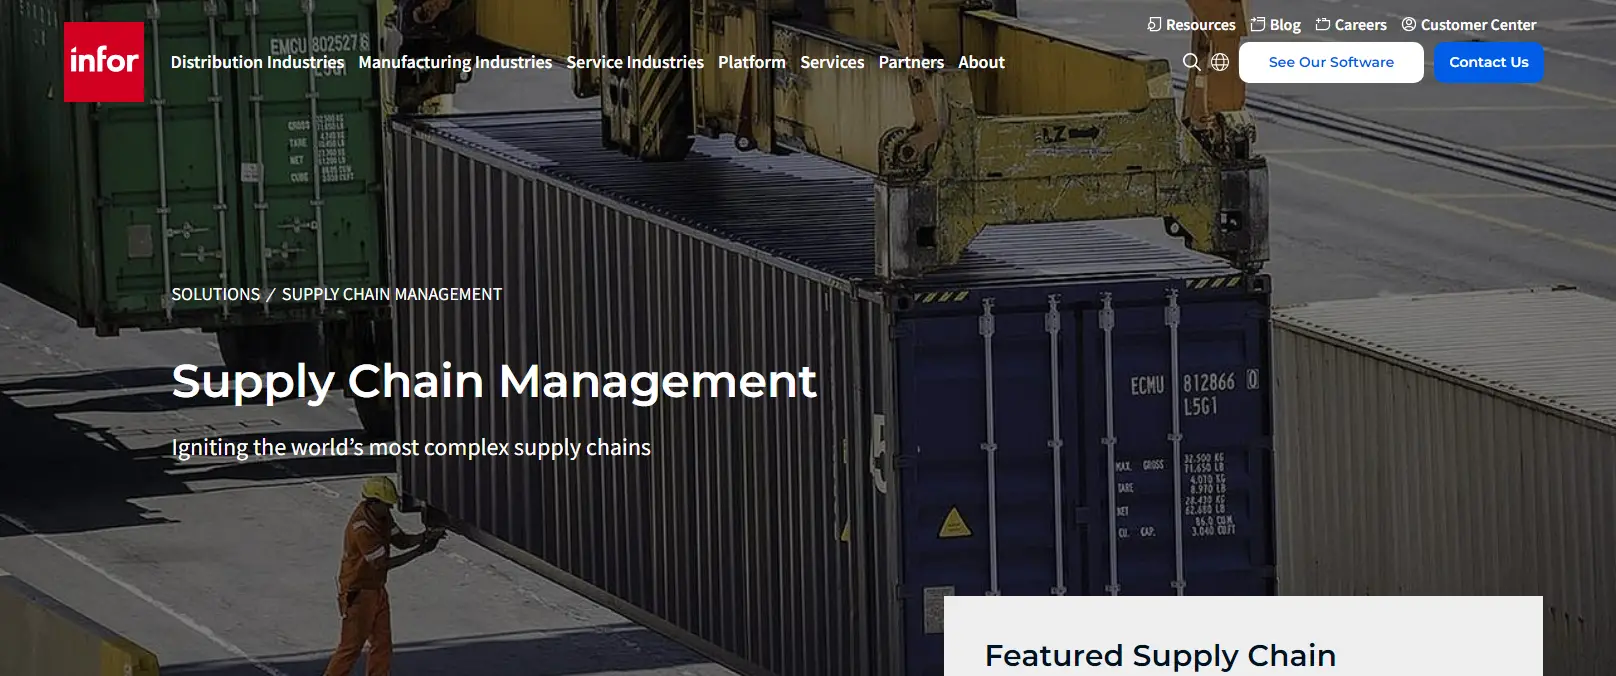 Infor Supply Chain Management Suite de Software para la Cadena de Suministro